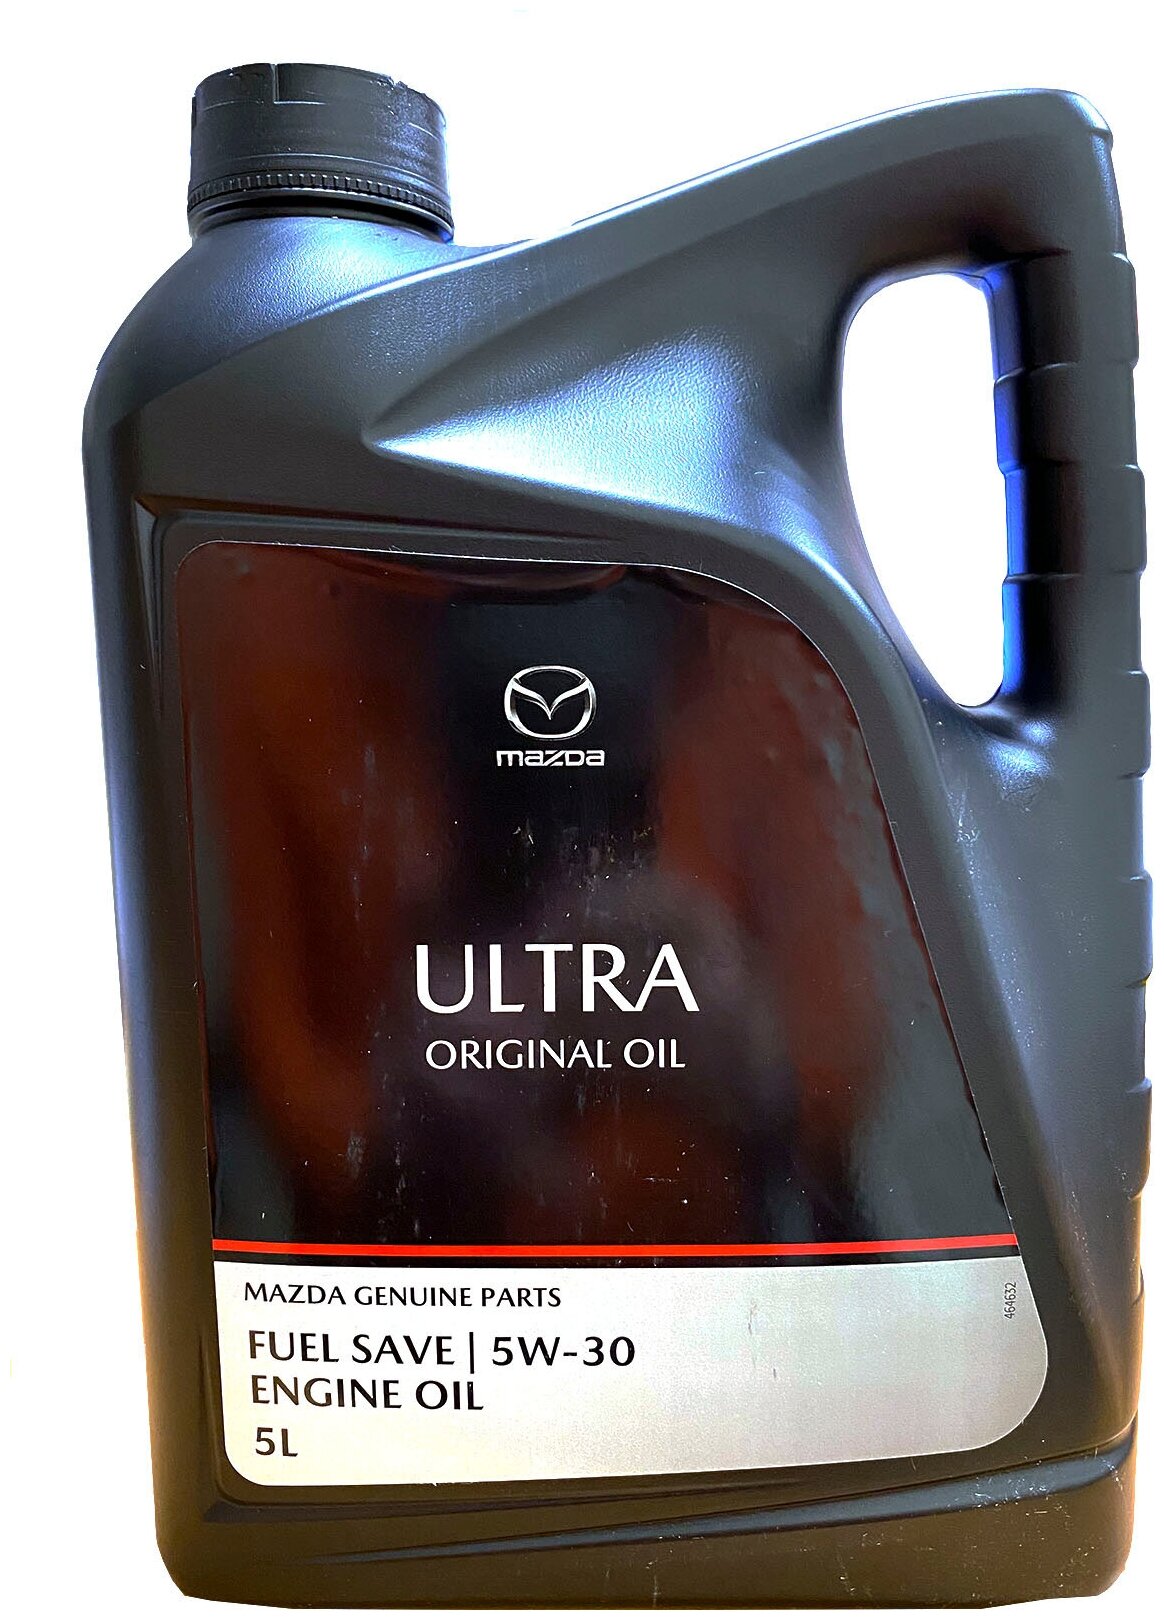 Синтетическое моторное масло Mazda Original Oil Ultra 5W-30, 5 л .